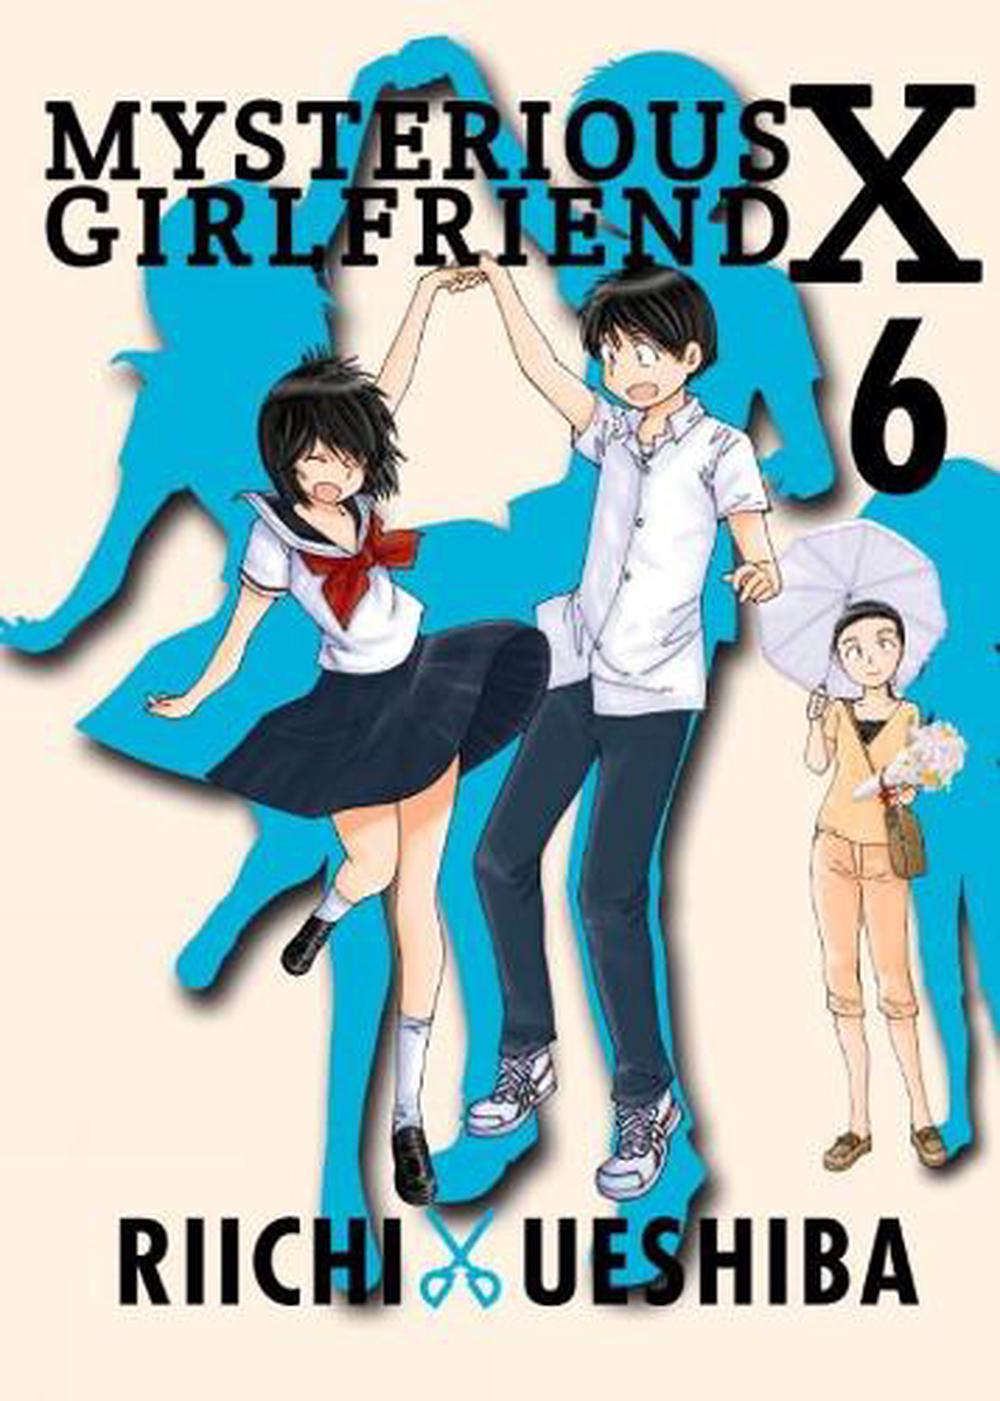 Mysterious Girlfriend X, Vol. 2 by Riichi Ueshiba